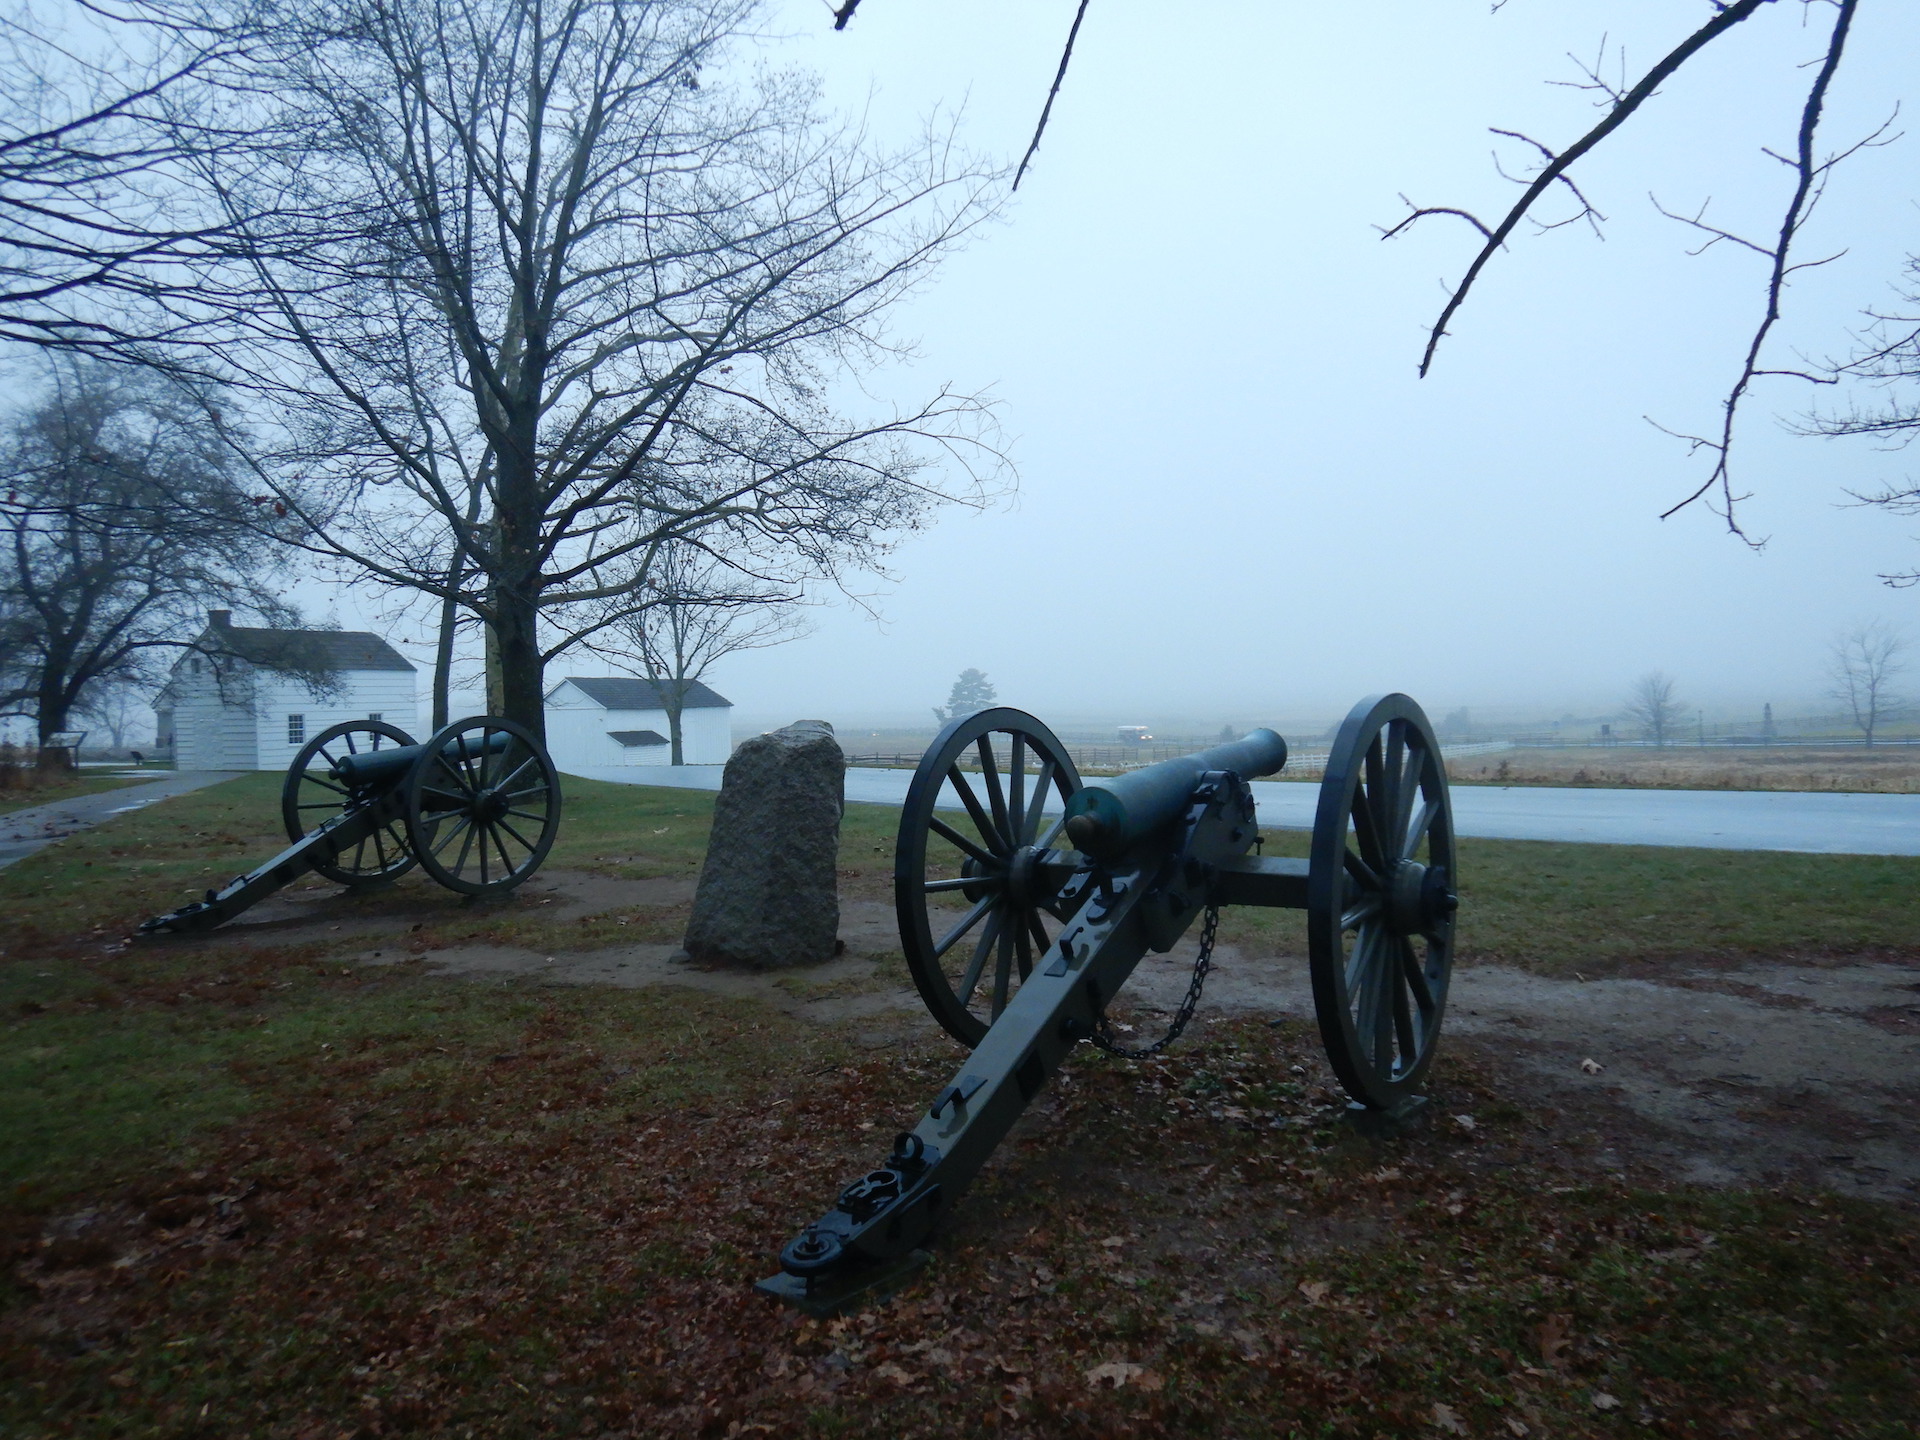 U.S. Civil War cannons face away toward horizon. Deep overcast skies and bare trees fill the scene.